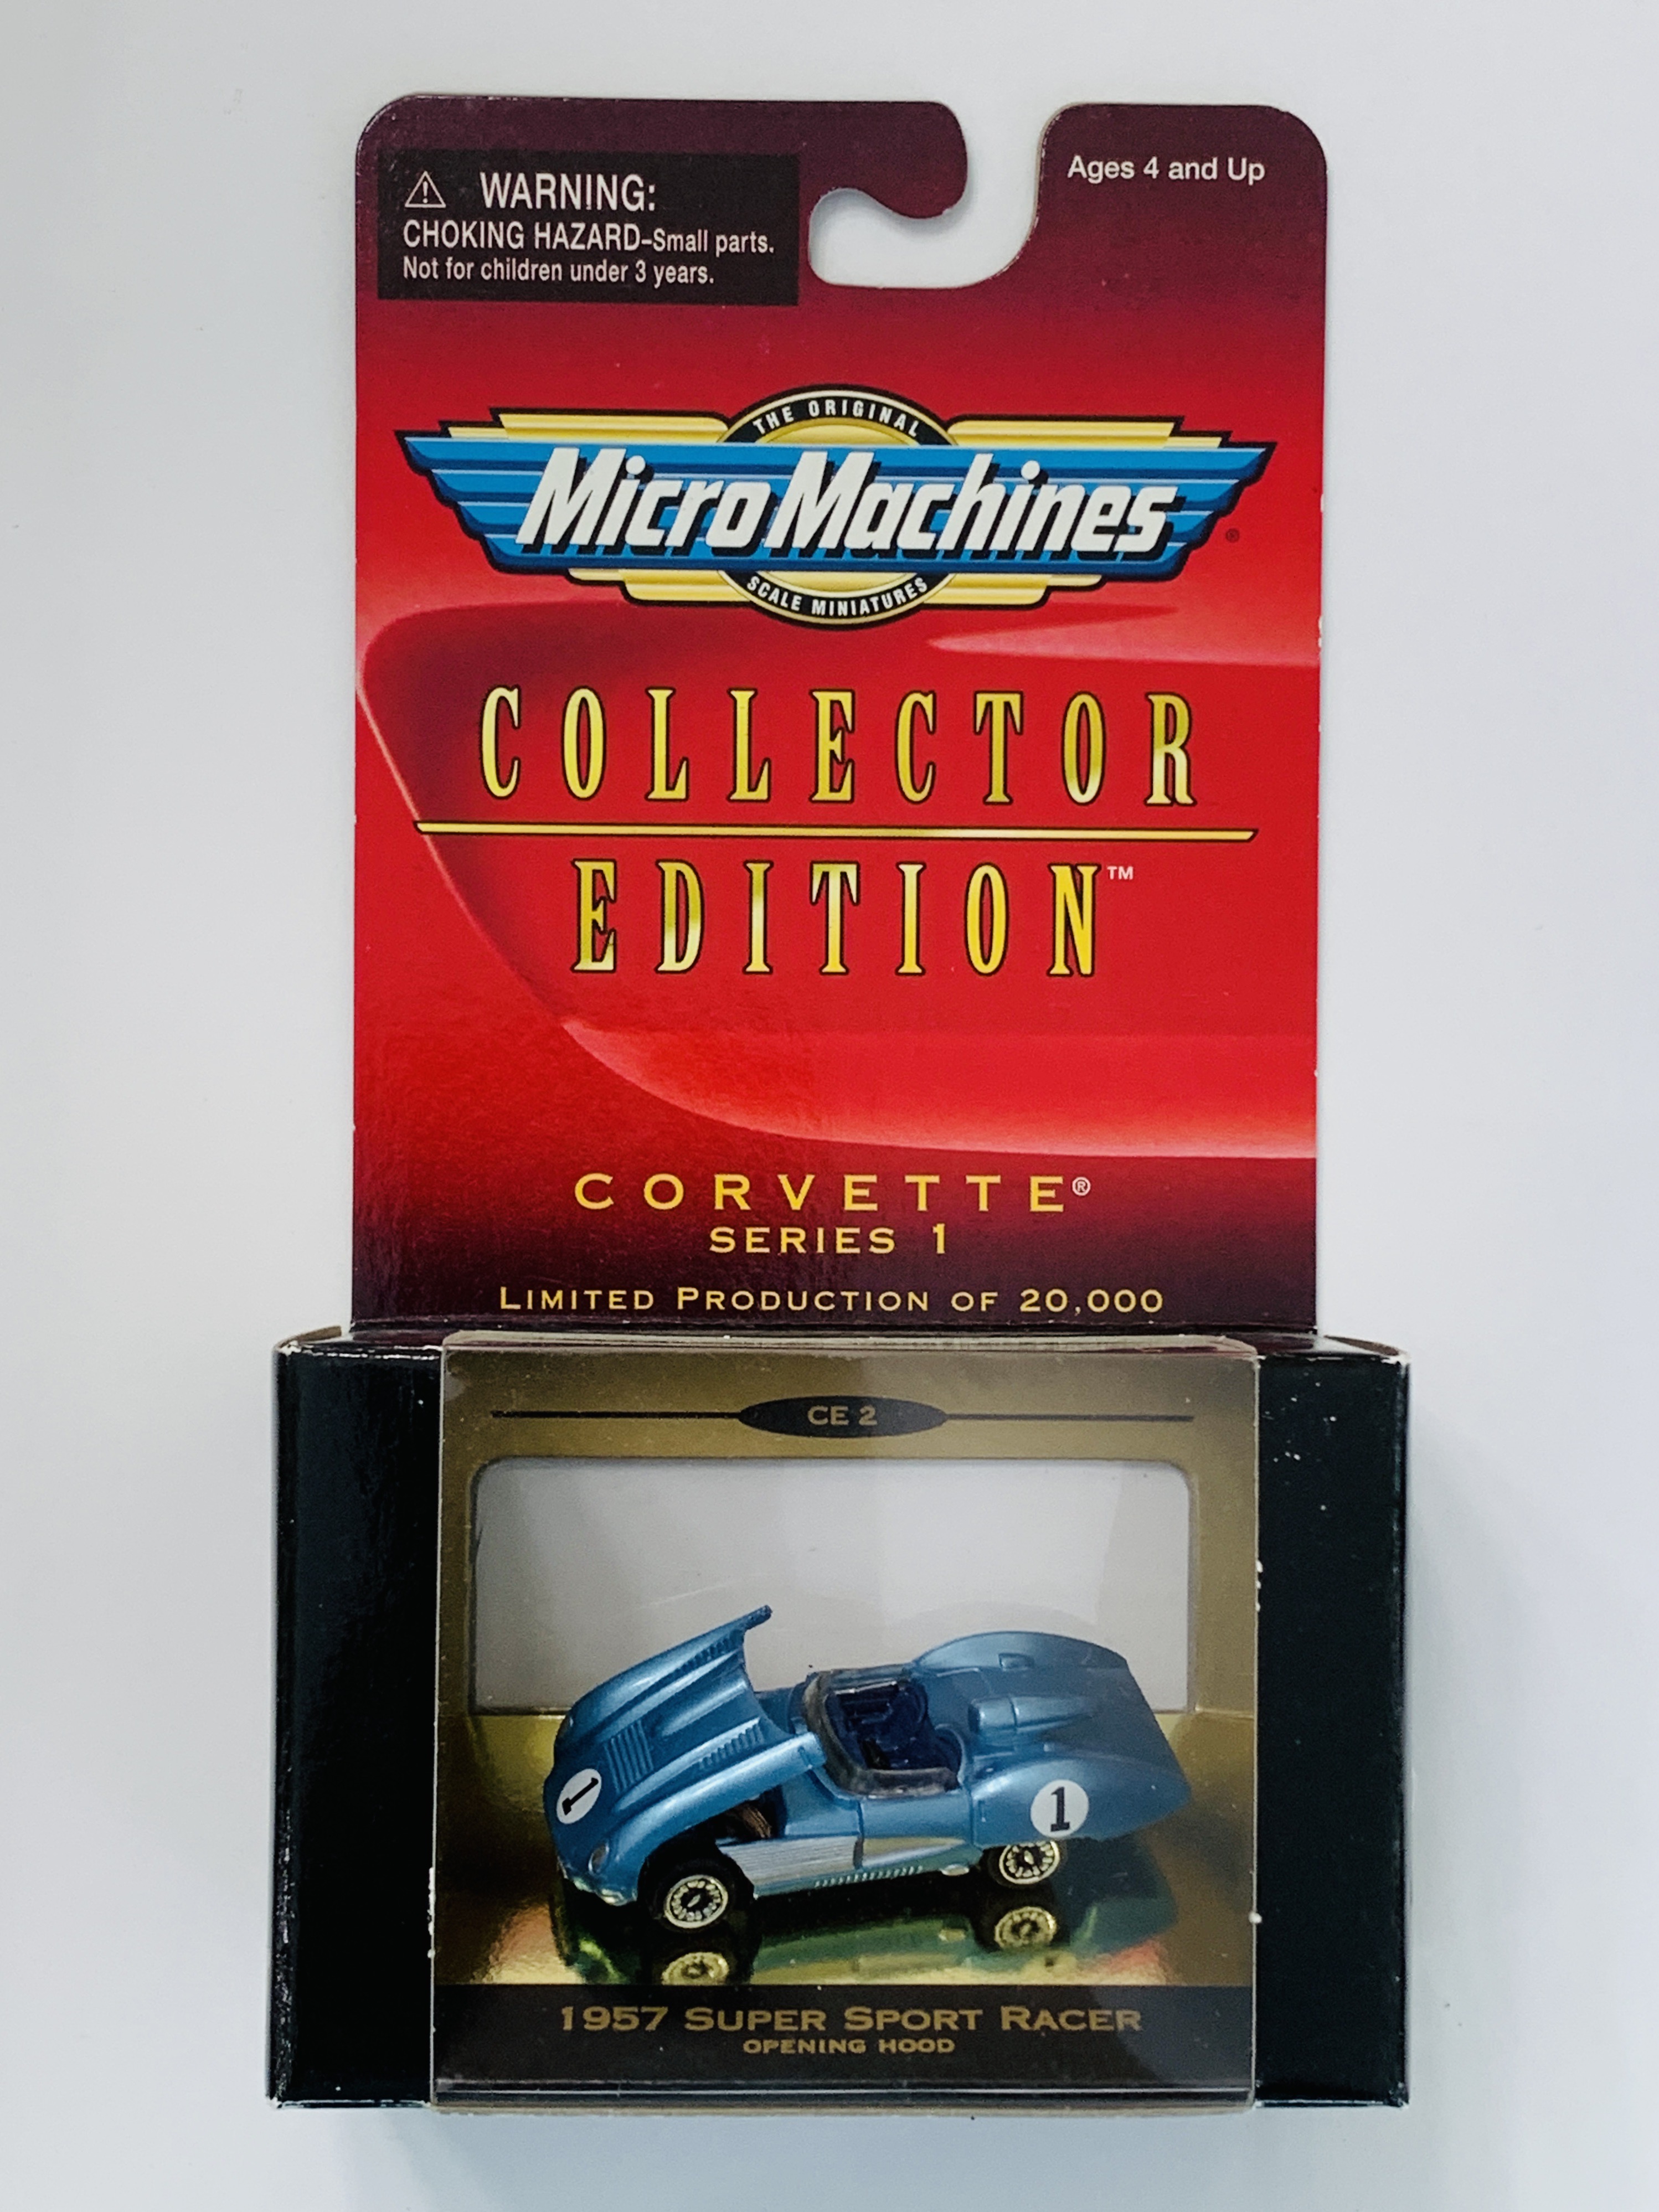 Micro Machines Collector Edition Corvette Series 1 1957 Super Sport Racer